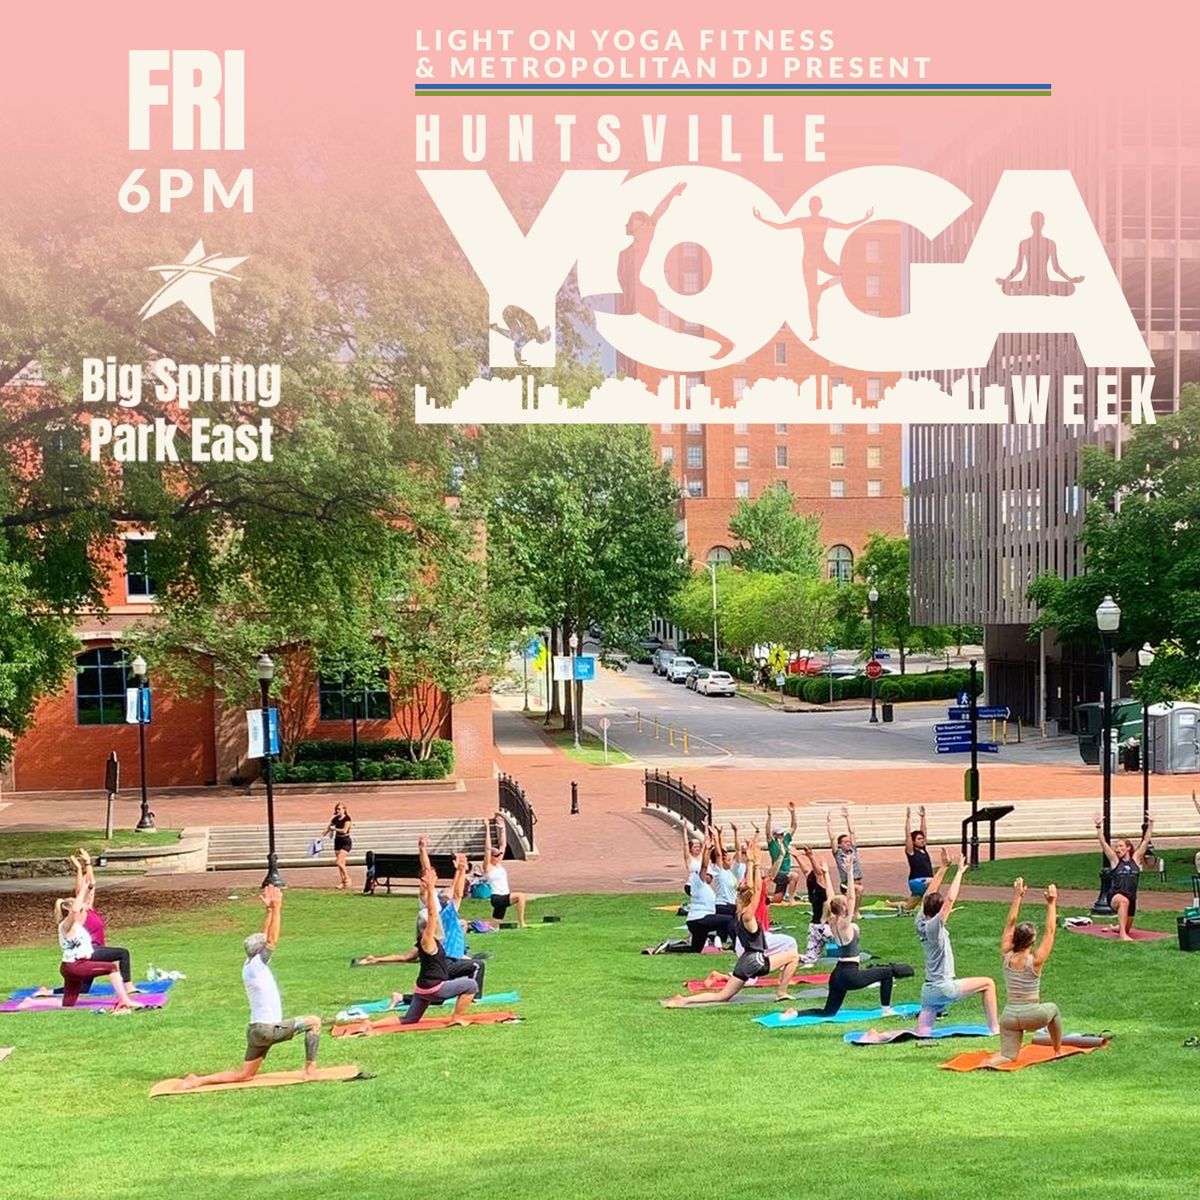 Huntsville Yoga Week - Big Spring Park East